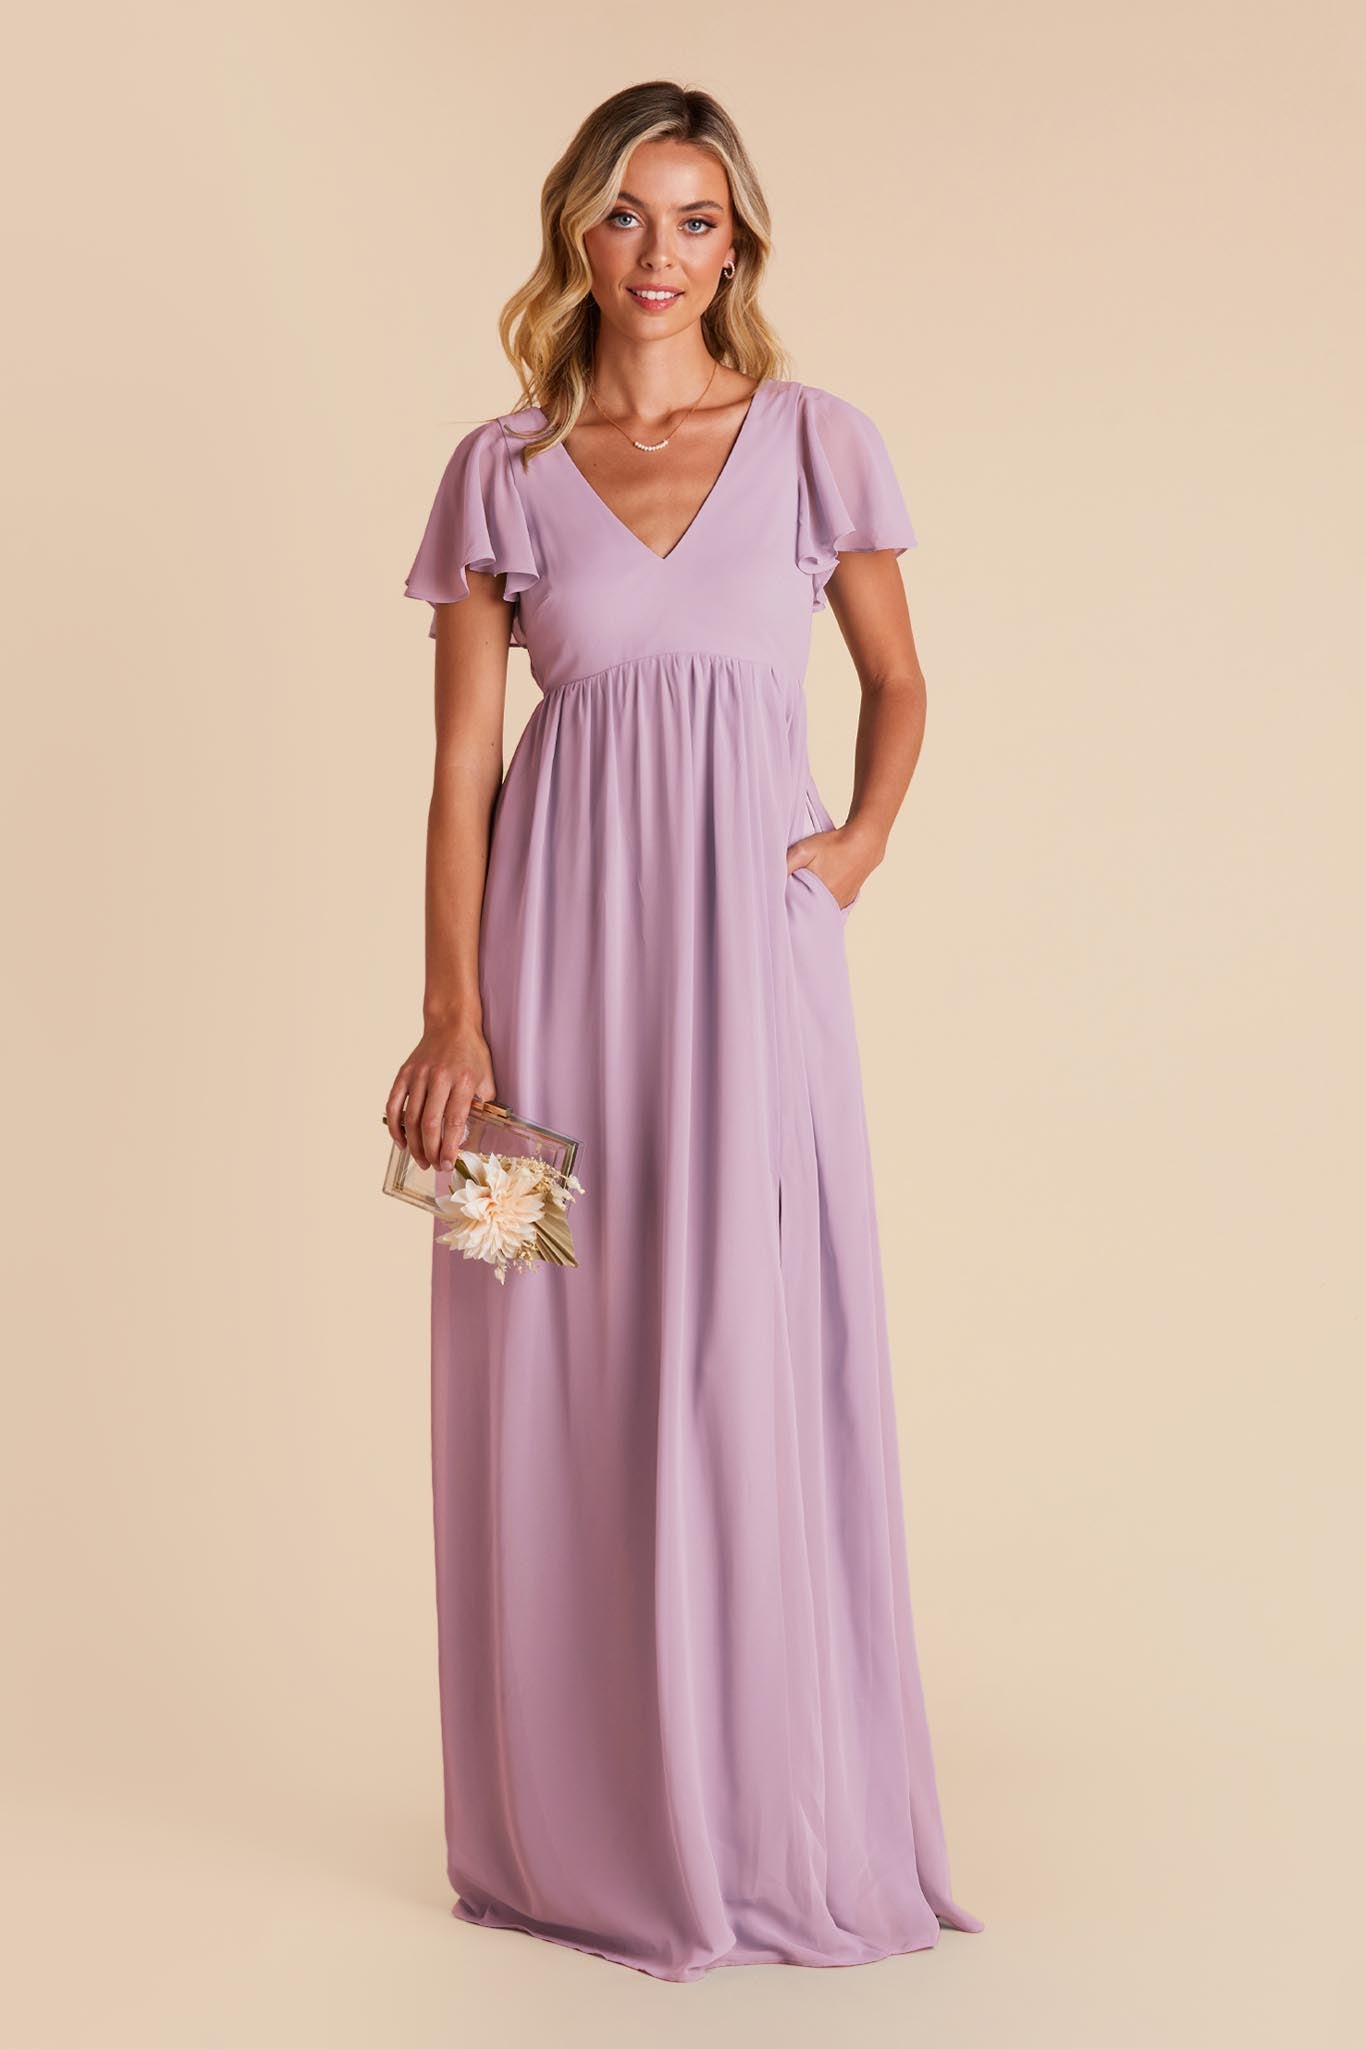 Lavender Hannah Empire Dress by Birdy Grey